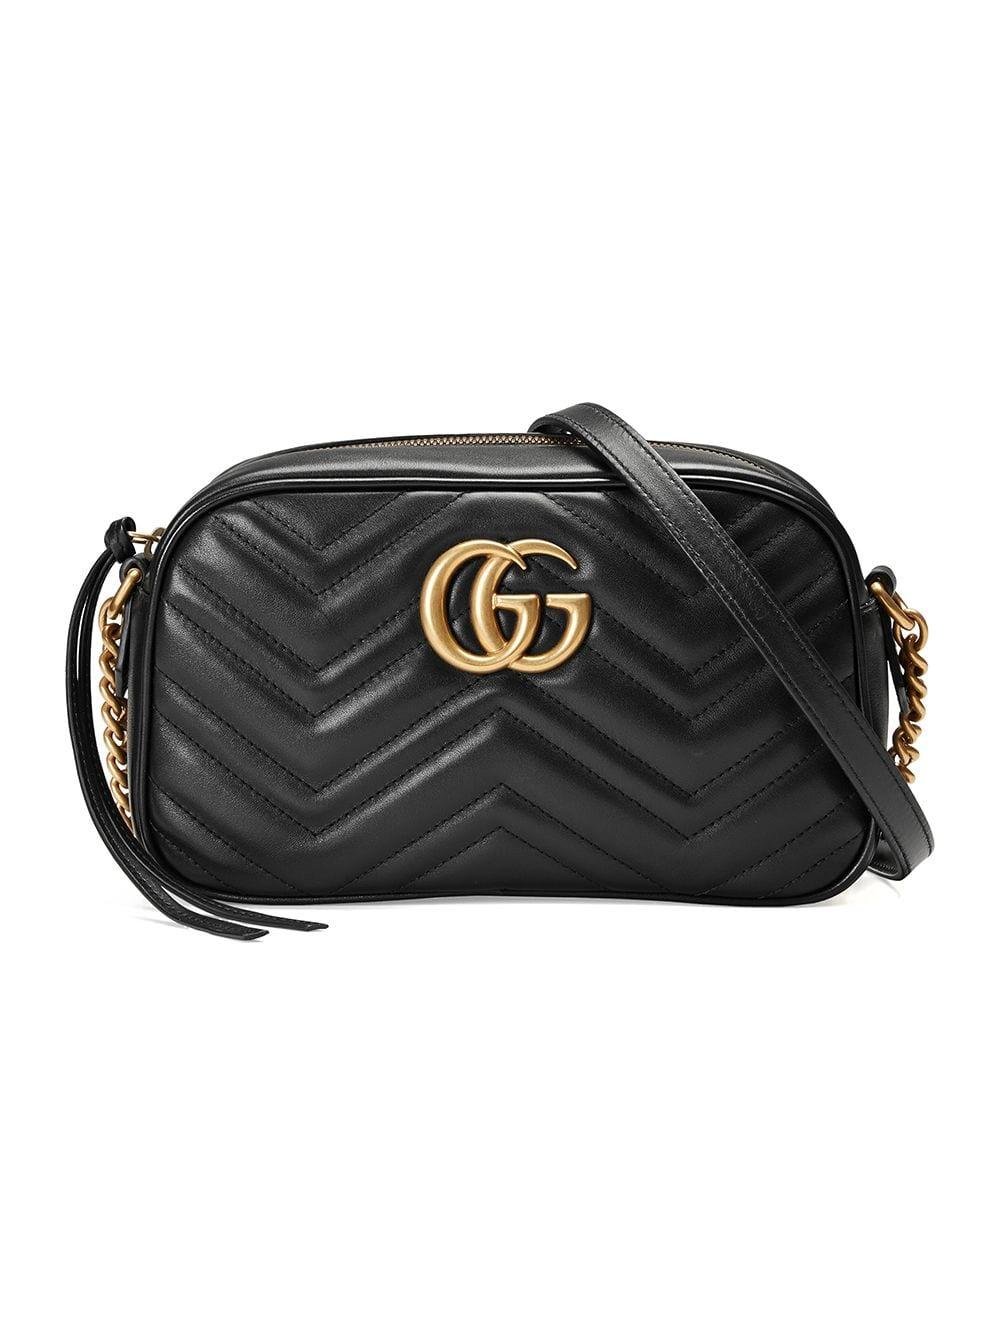 Gucci Leather Gg Marmont Matelassã© Shoulder Bag in Black Leather ...